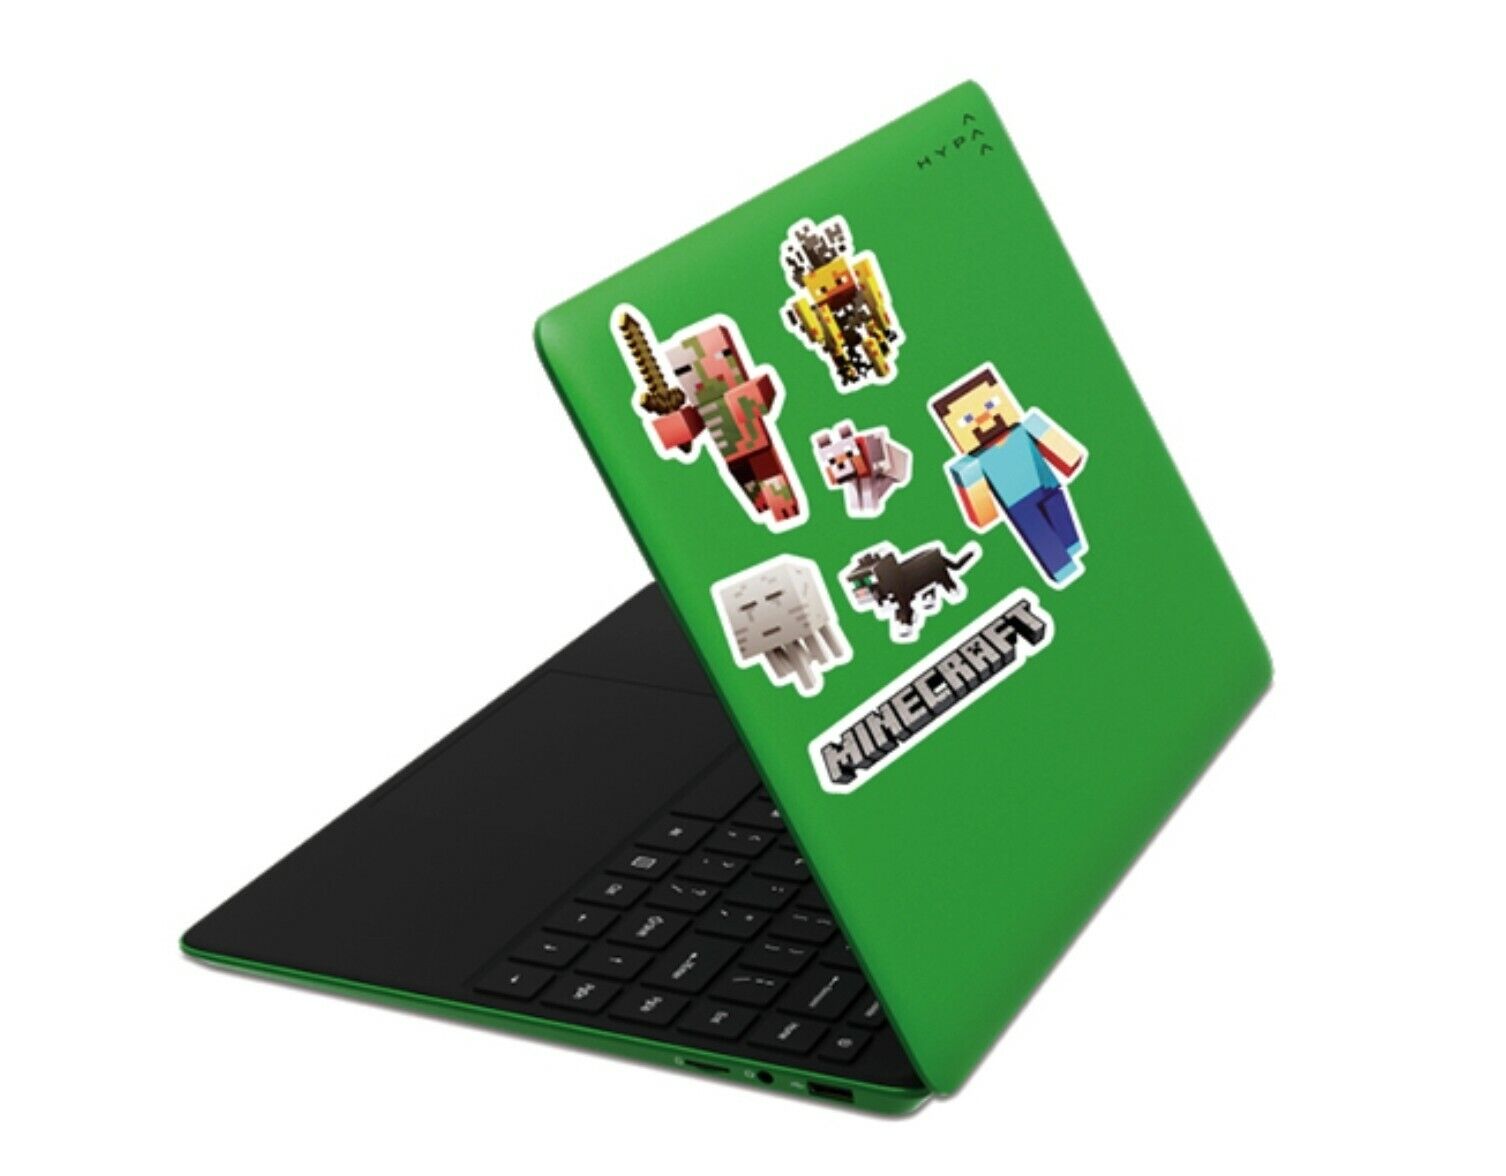 Windows-10-Laptop-Hypa-14-Minecraft-Edition-Pentium-4GB-RAM-64GB-eMMC-Green-164710461721